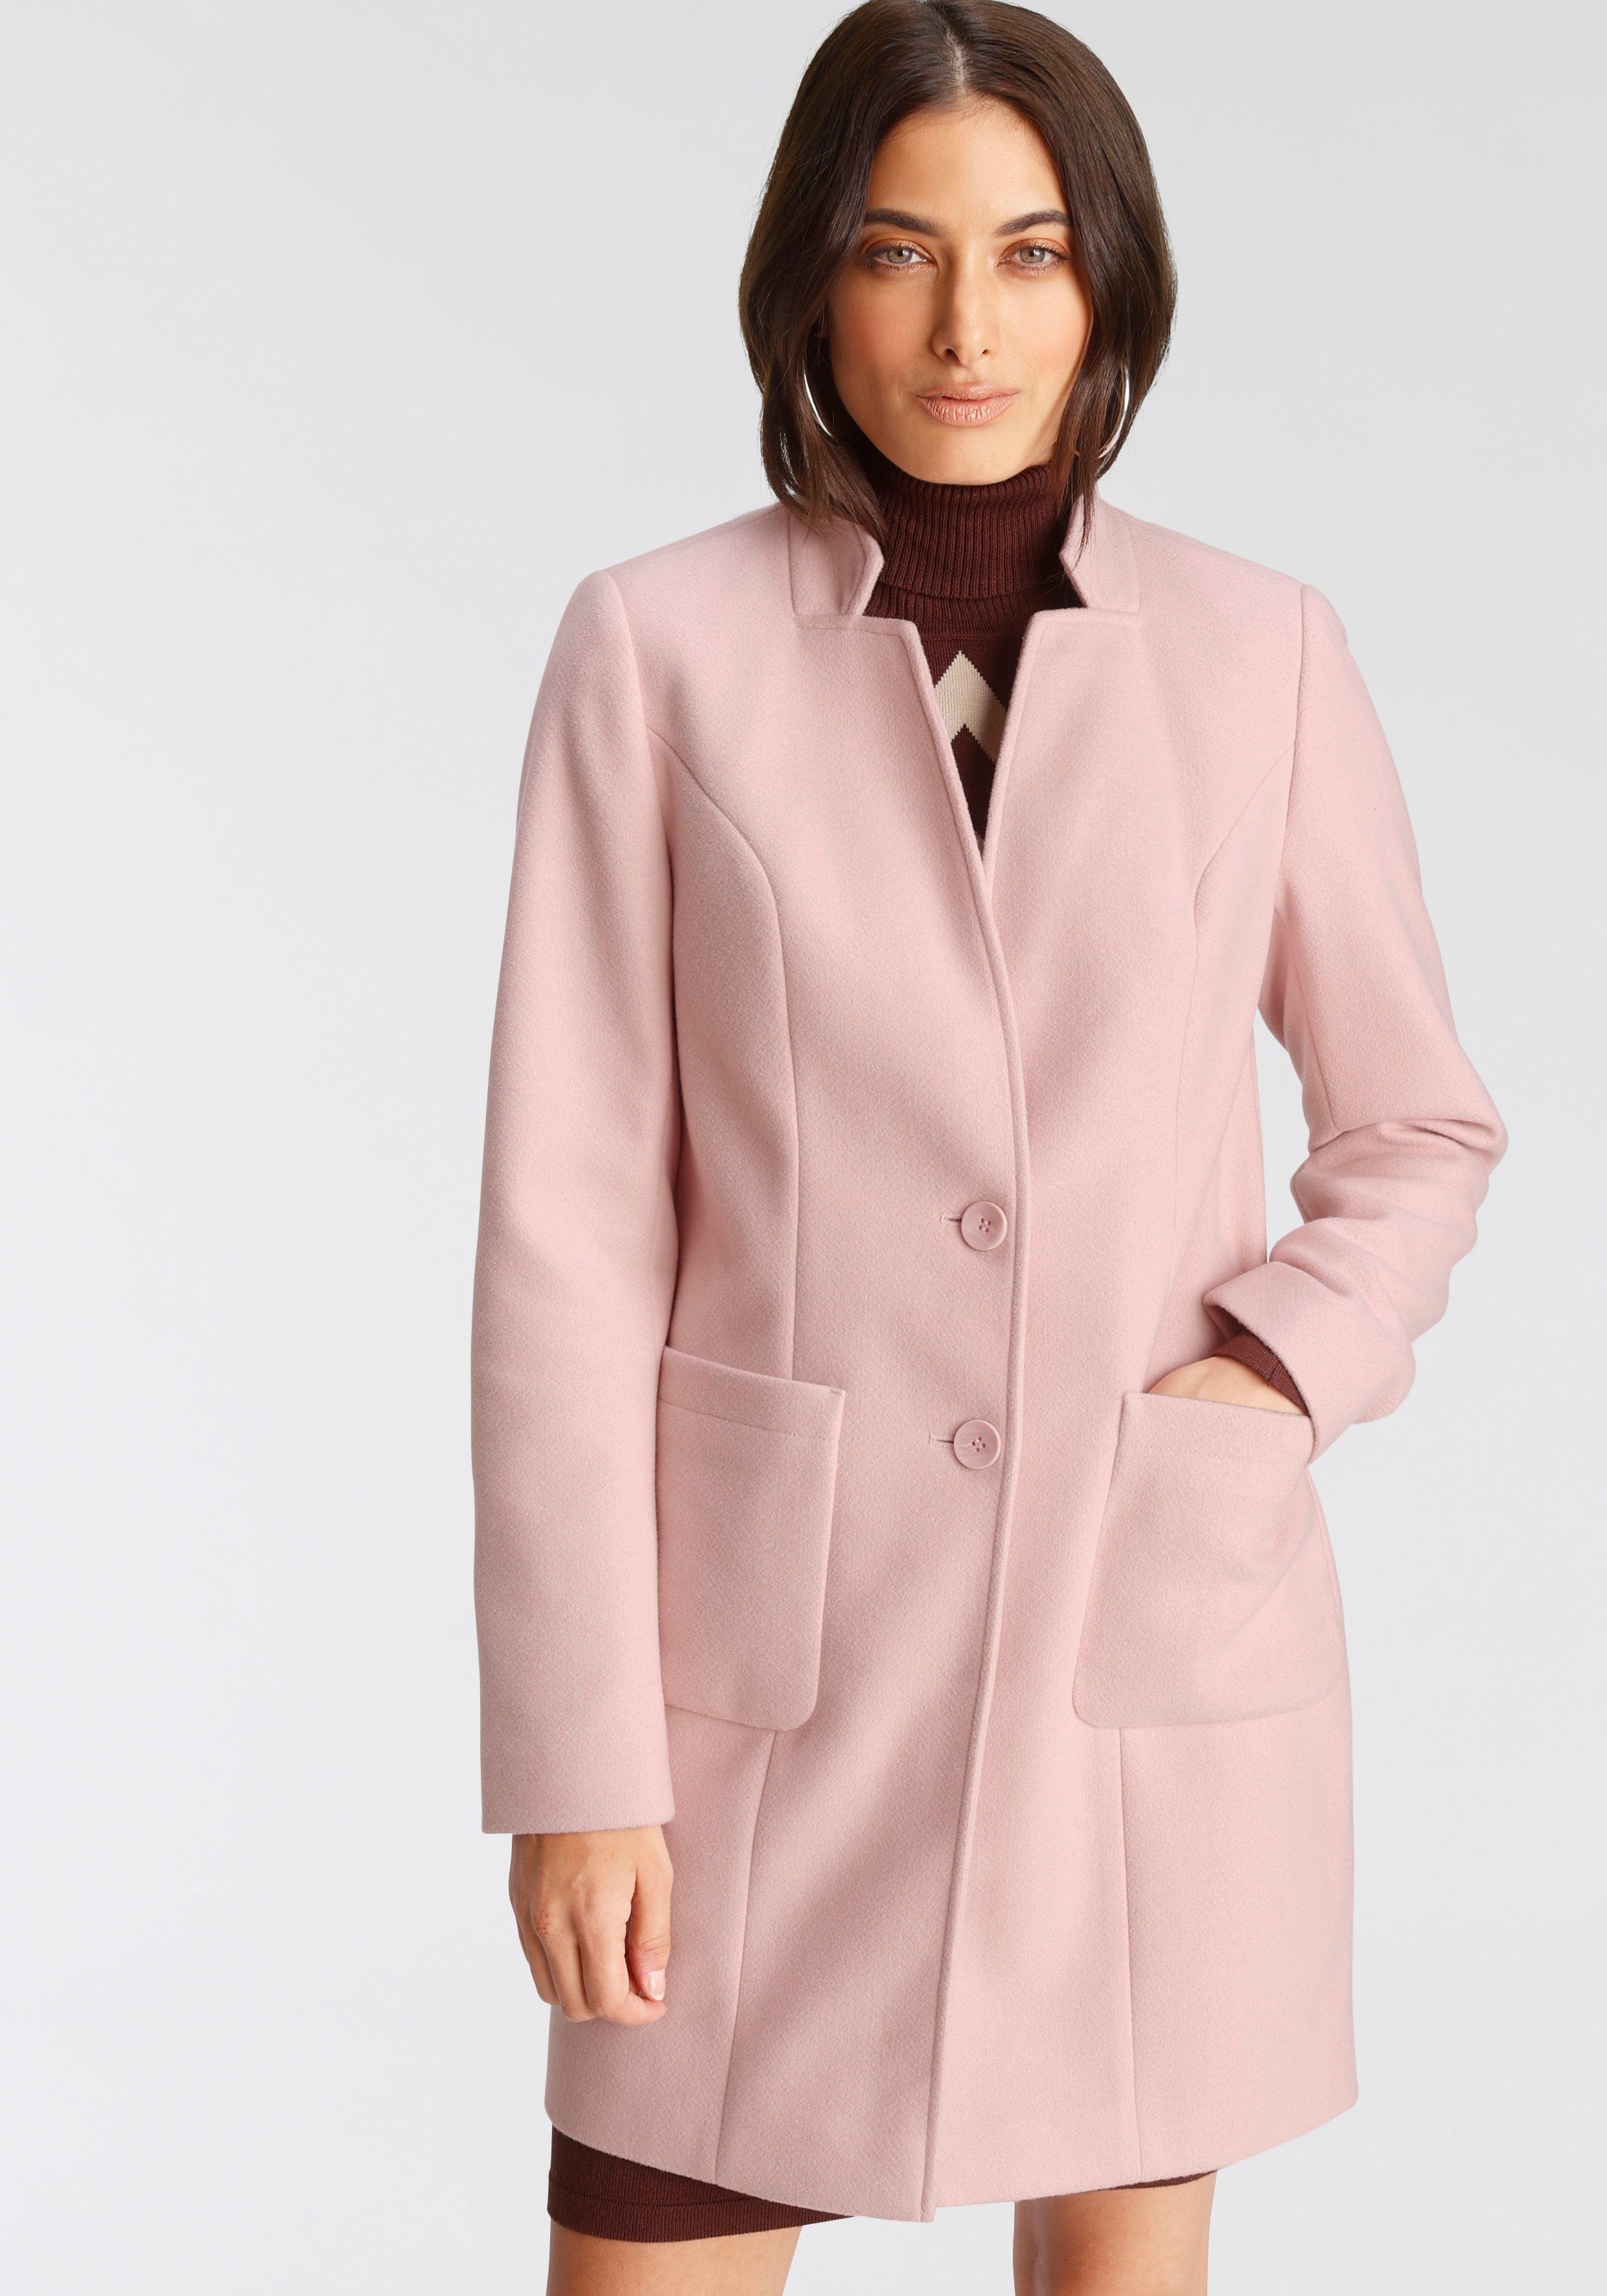 Rosa Trenchcoats für Damen kaufen » Pinke Trenchcoats | OTTO